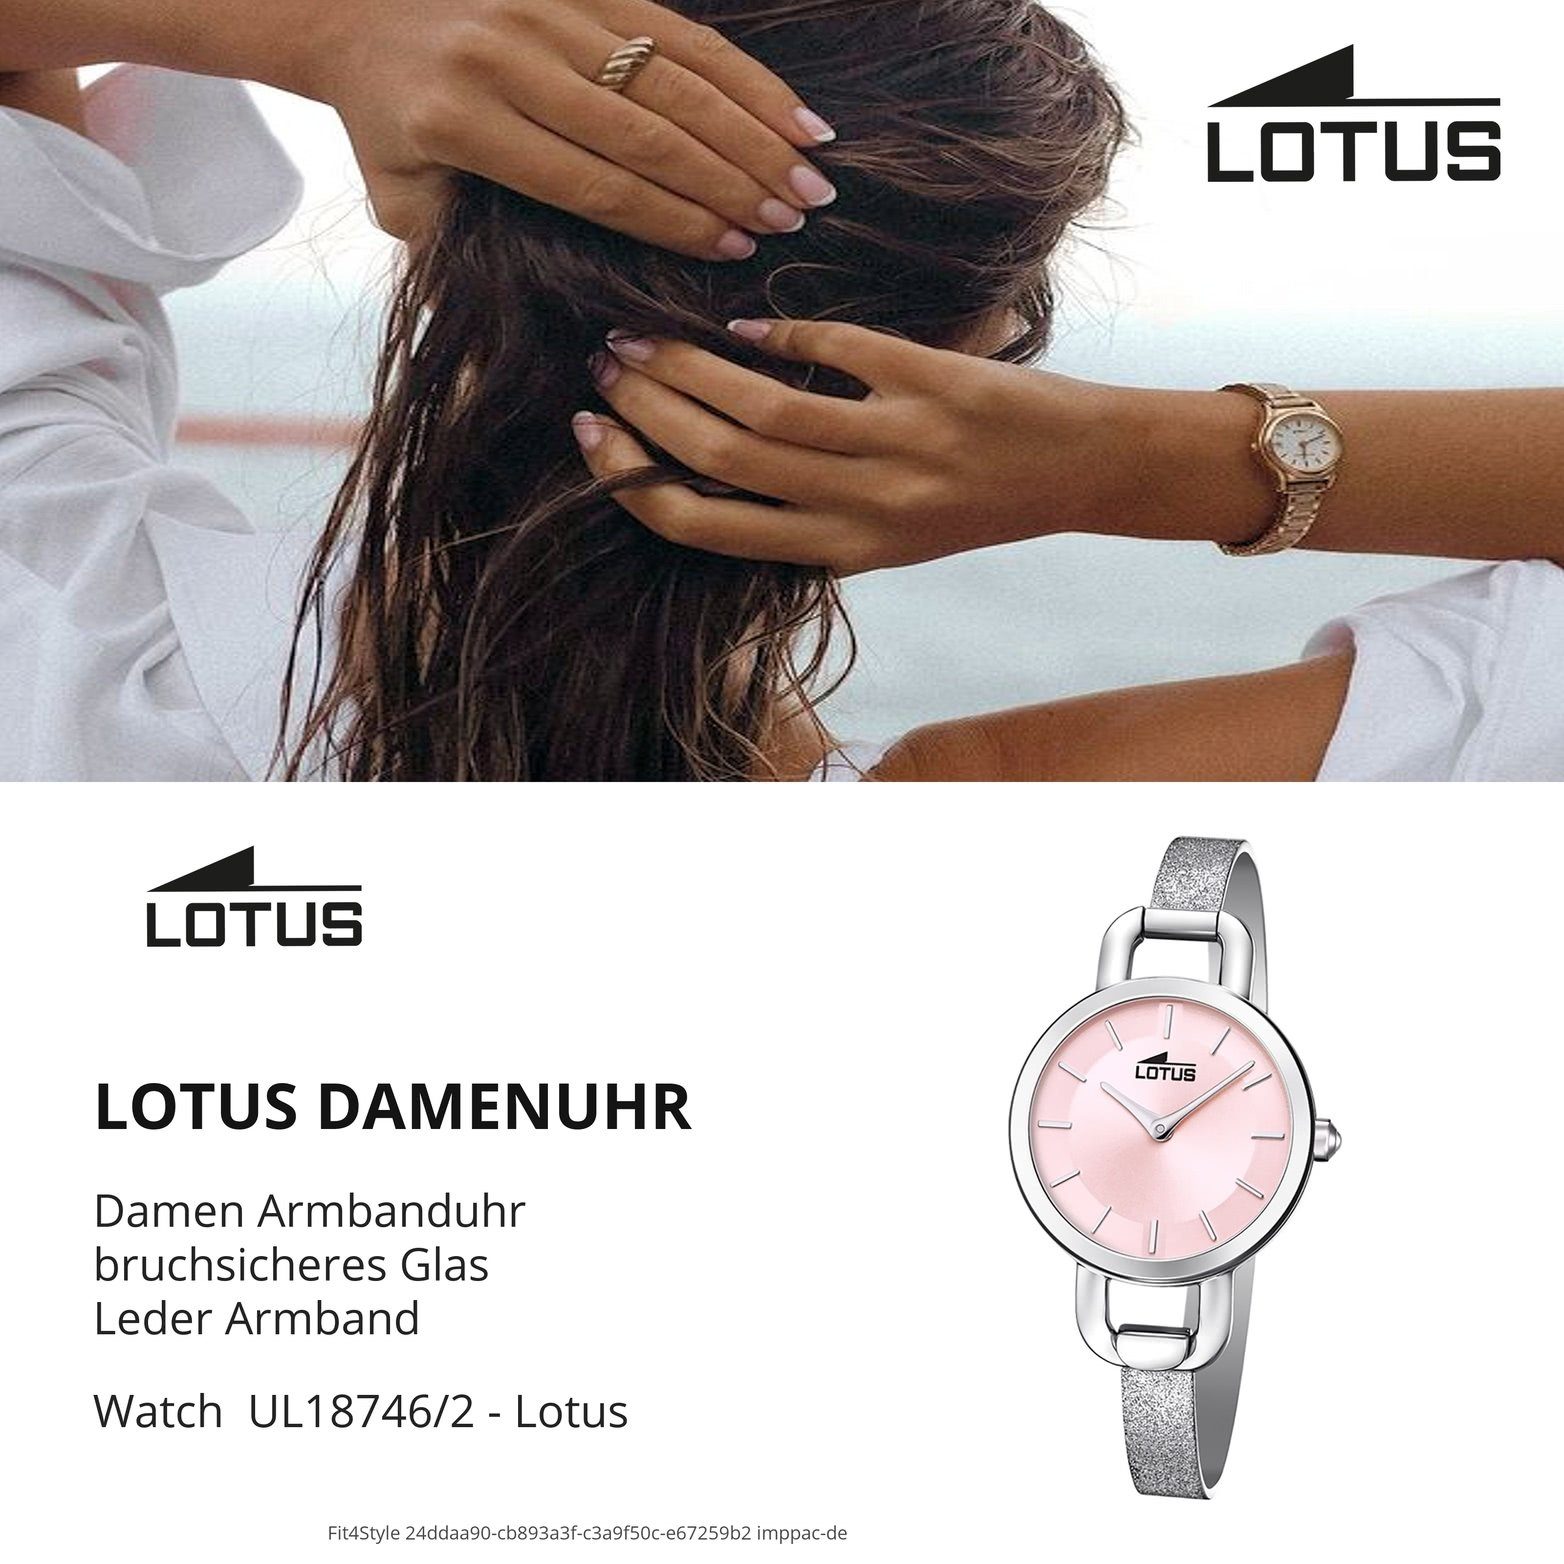 Leder mit Uhr Elegant-S 18746/2, Lotus Gehäuse, Damen Quarzuhr Lederarmband, 28mm), Damenuhr klein Lotus rundes Analog (ca.